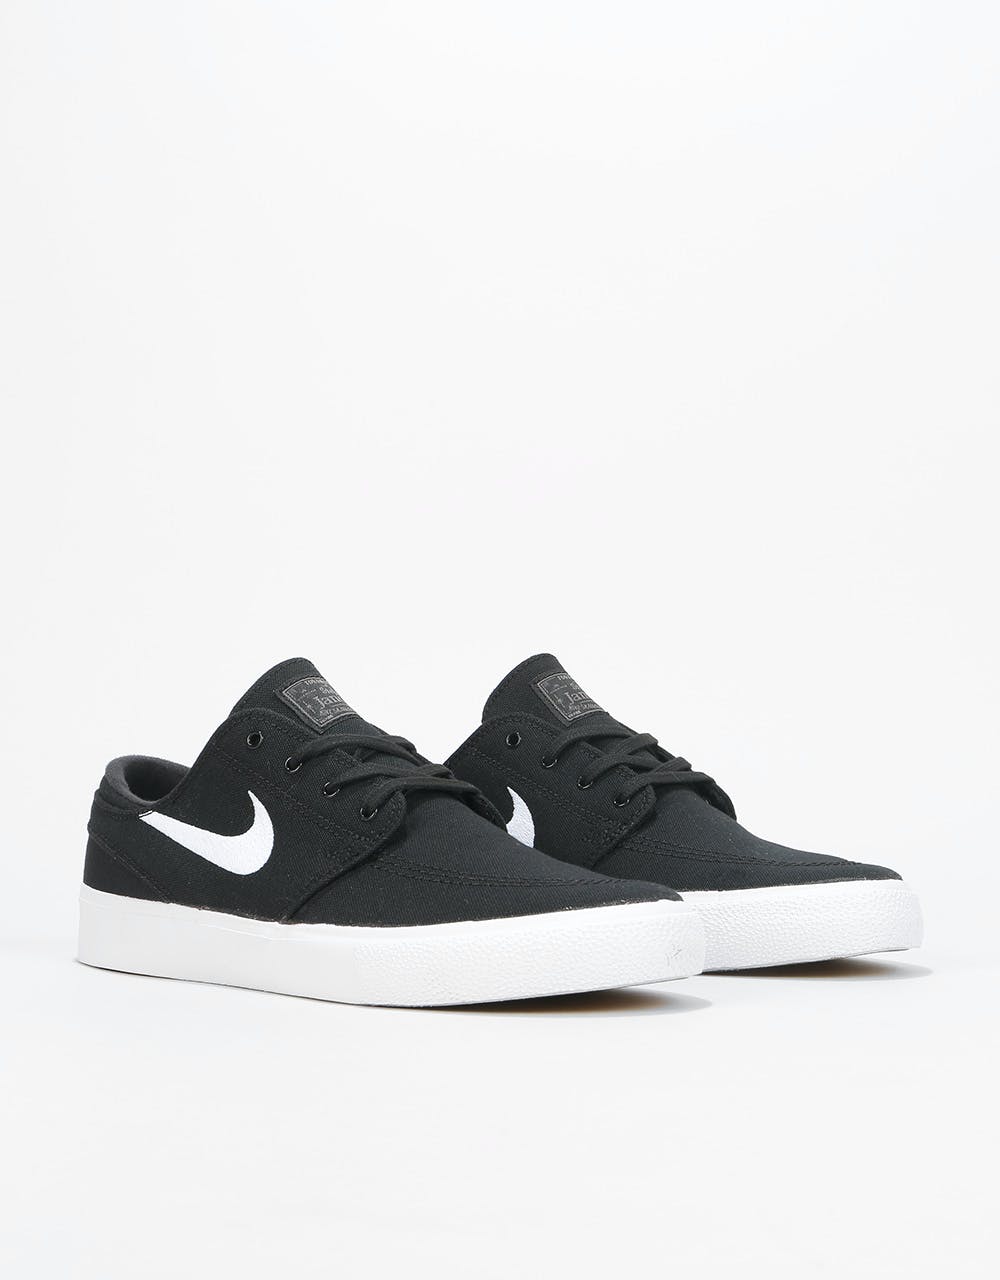 Nike SB Zoom Janoski RM Canvas Skate Shoes - Black/White-Thunder Grey